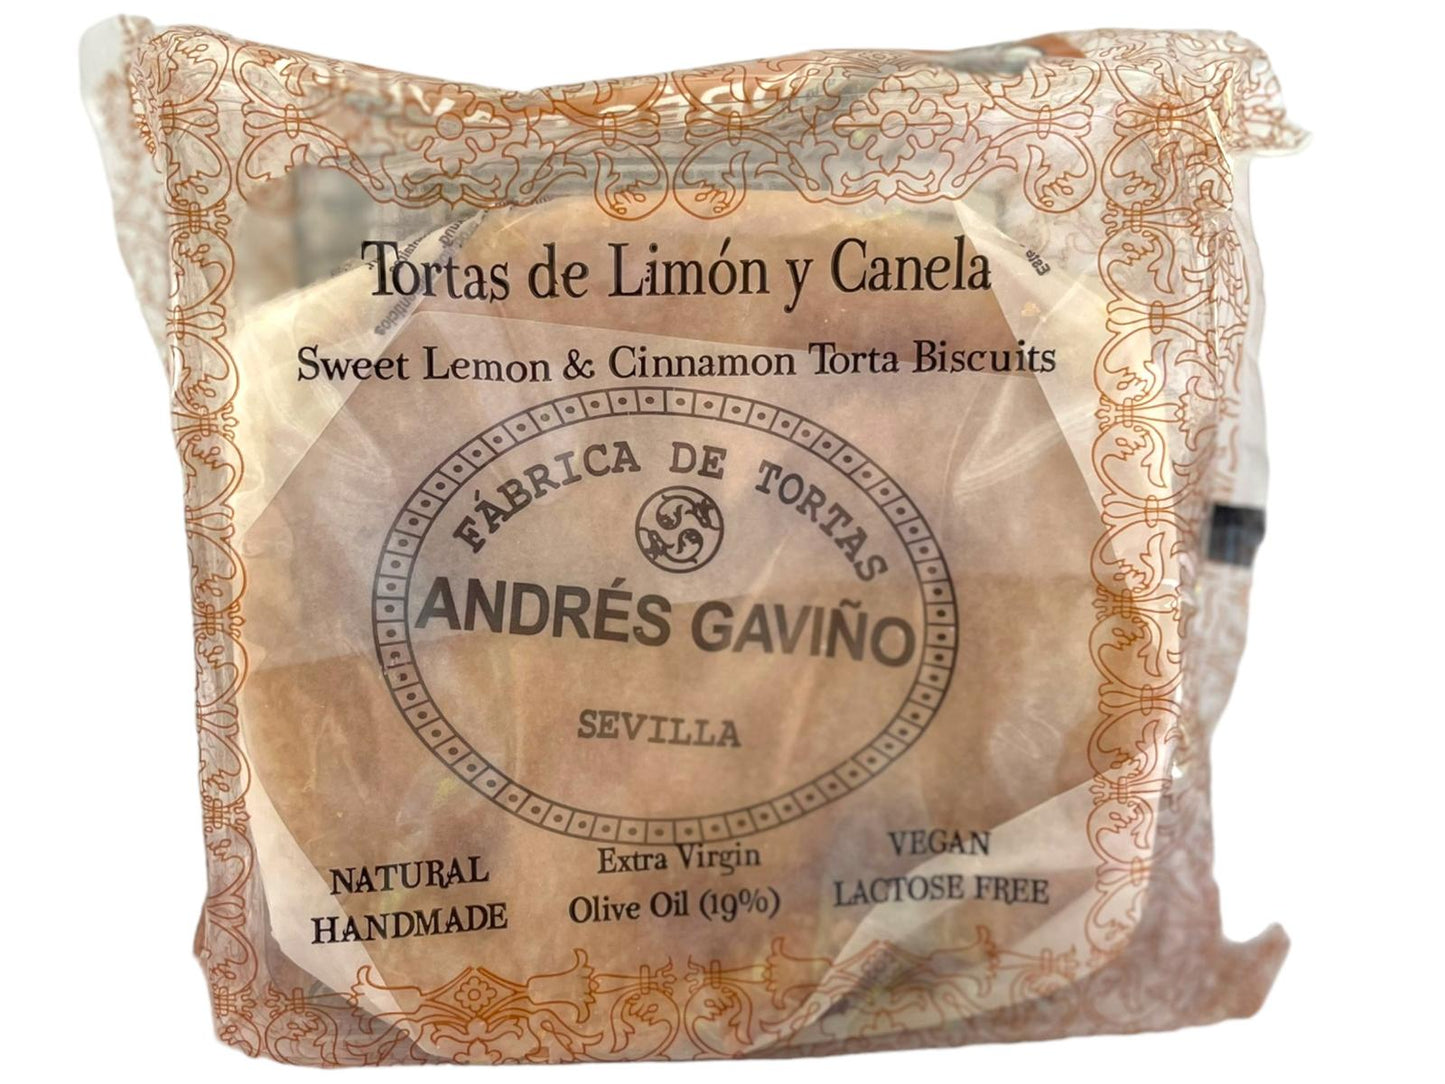 Andres Gavino Spanish Lemon And Cinnamon Tortas 180g Twin Pack 360g Total